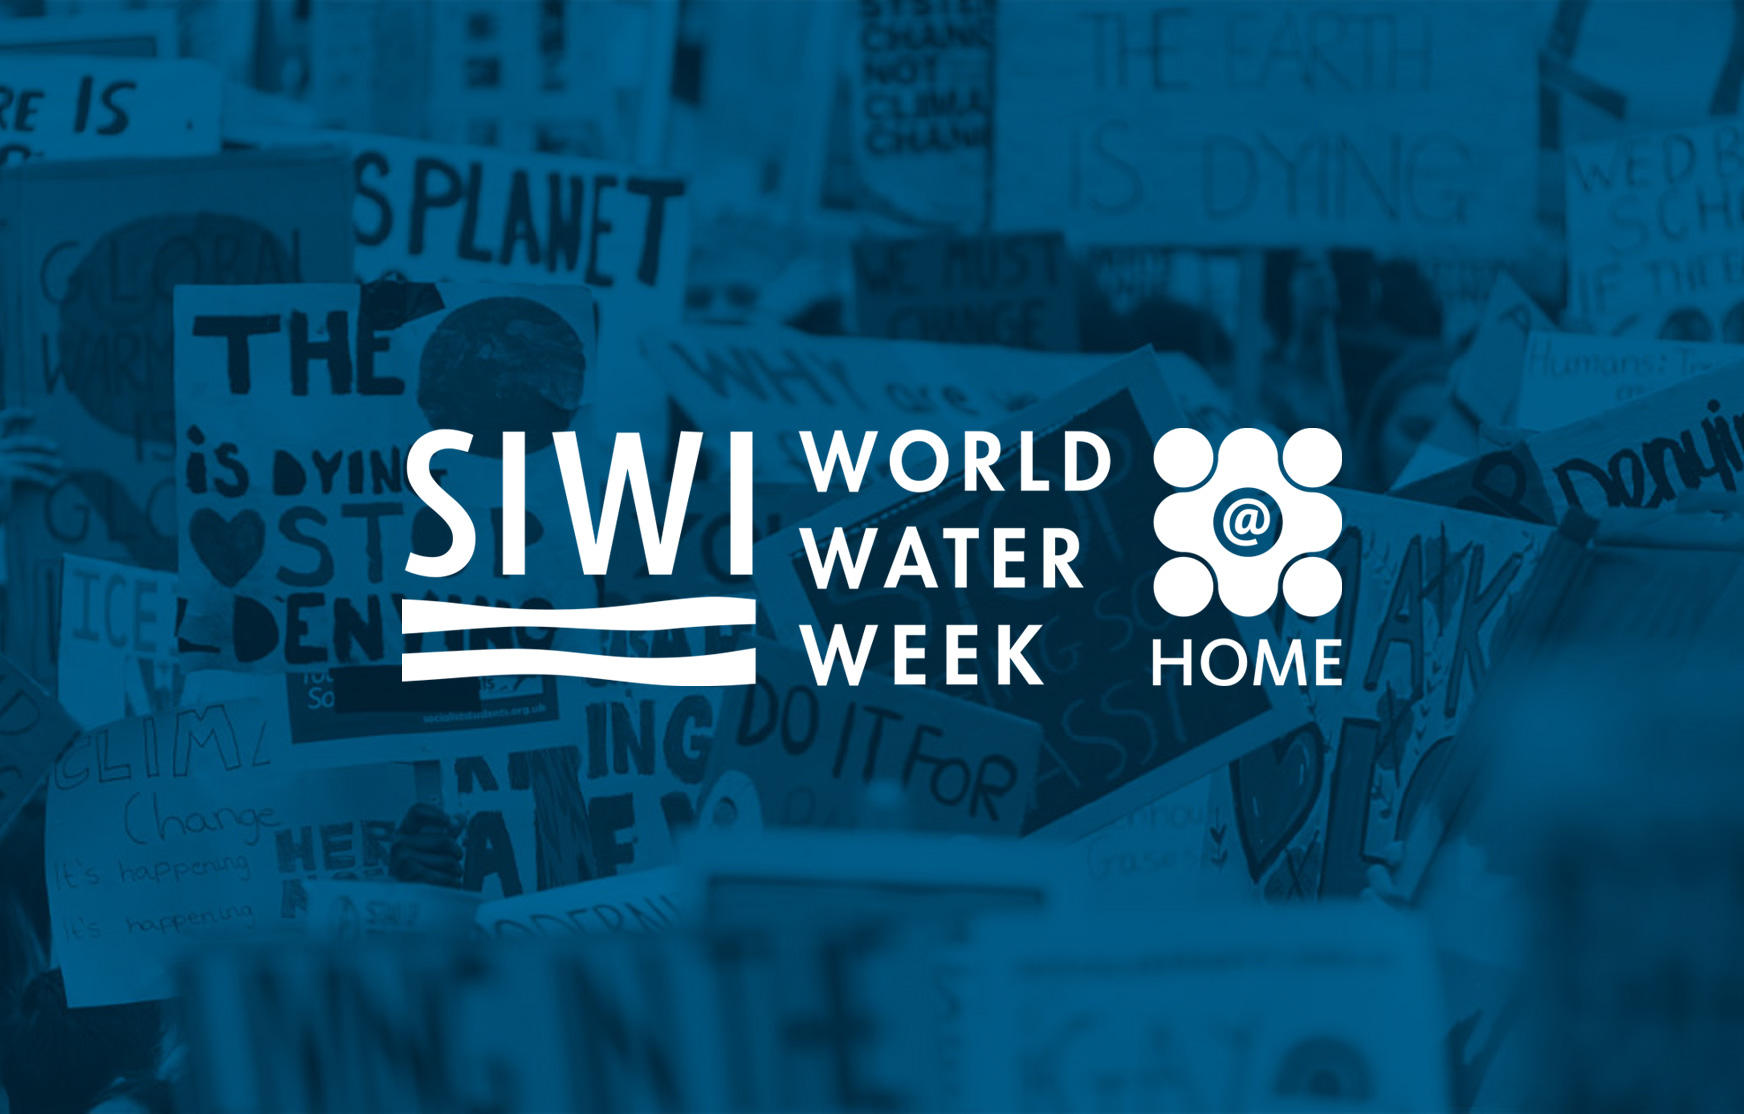 World Water Week 2020: 24-28 August_50.1